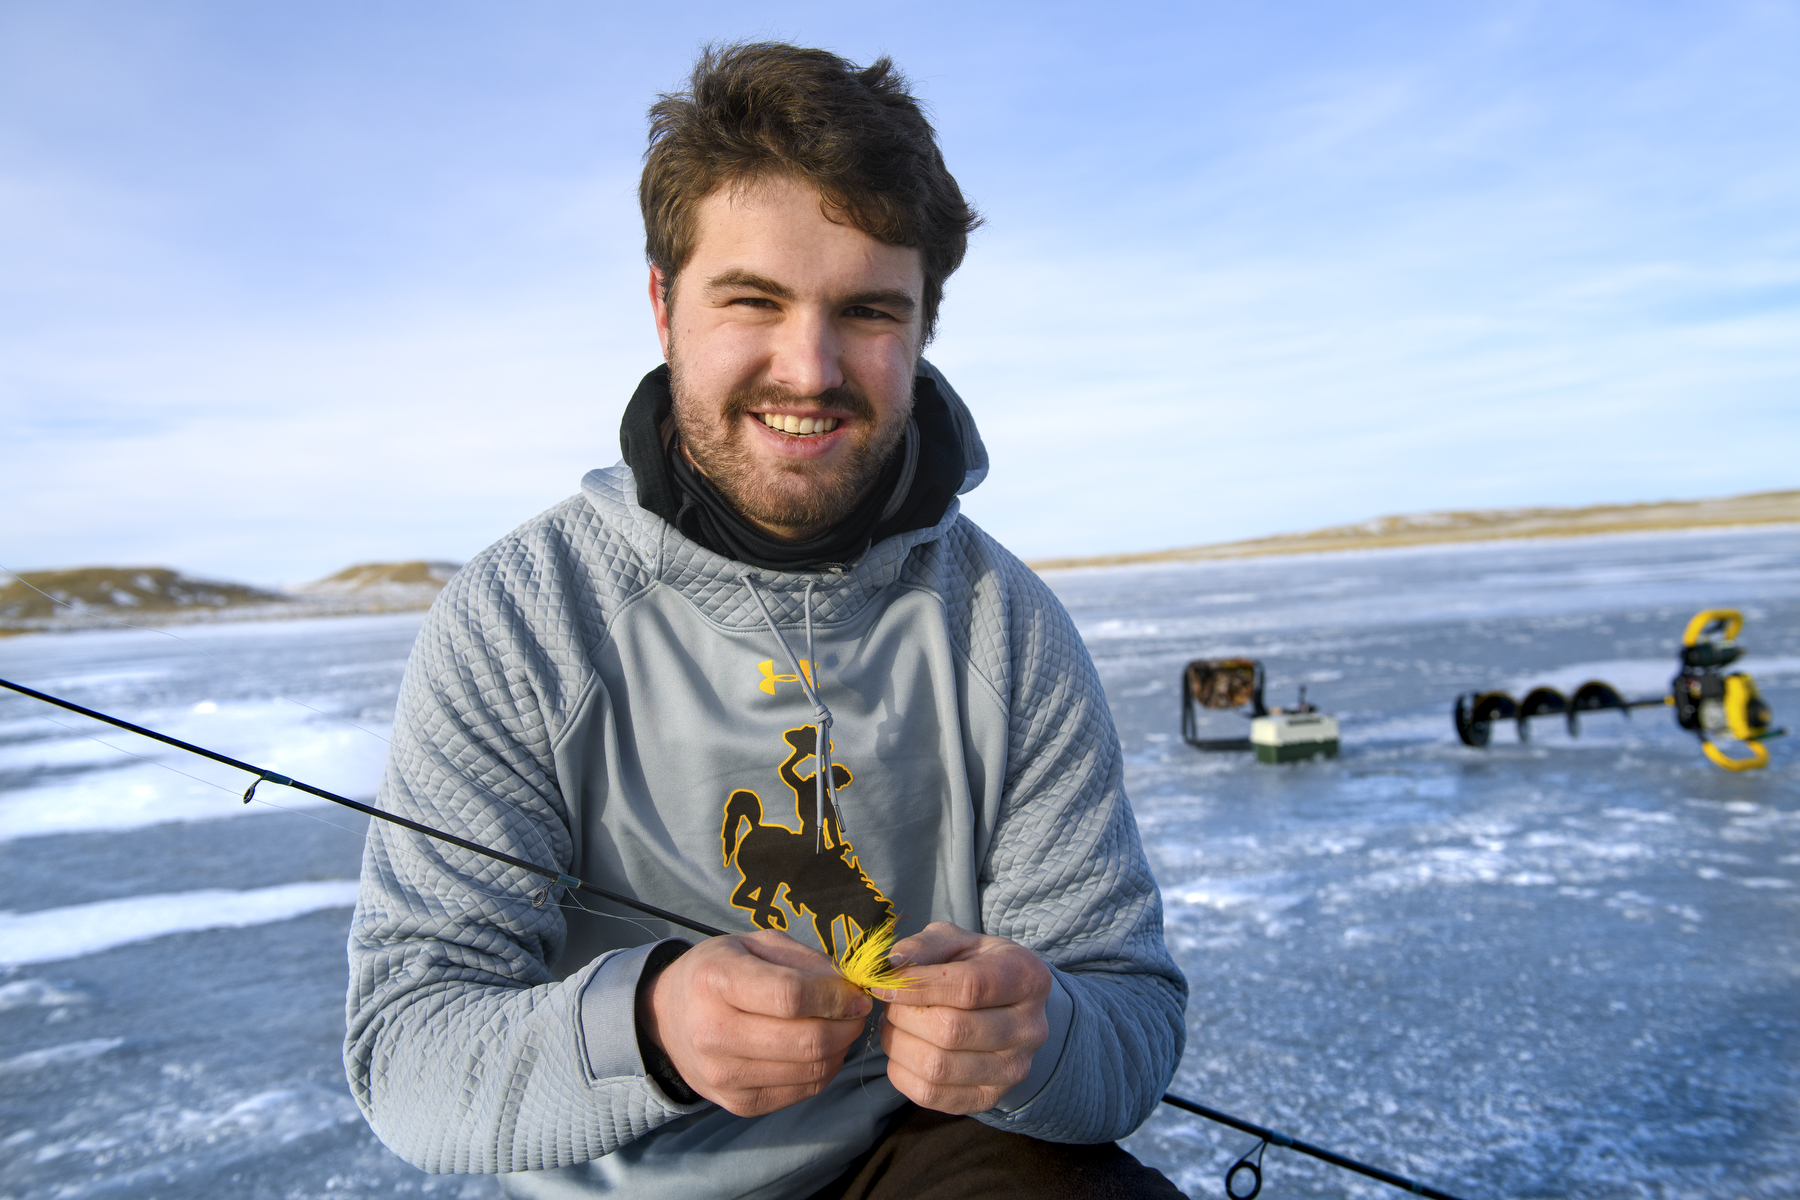 UW Student Ice fishing